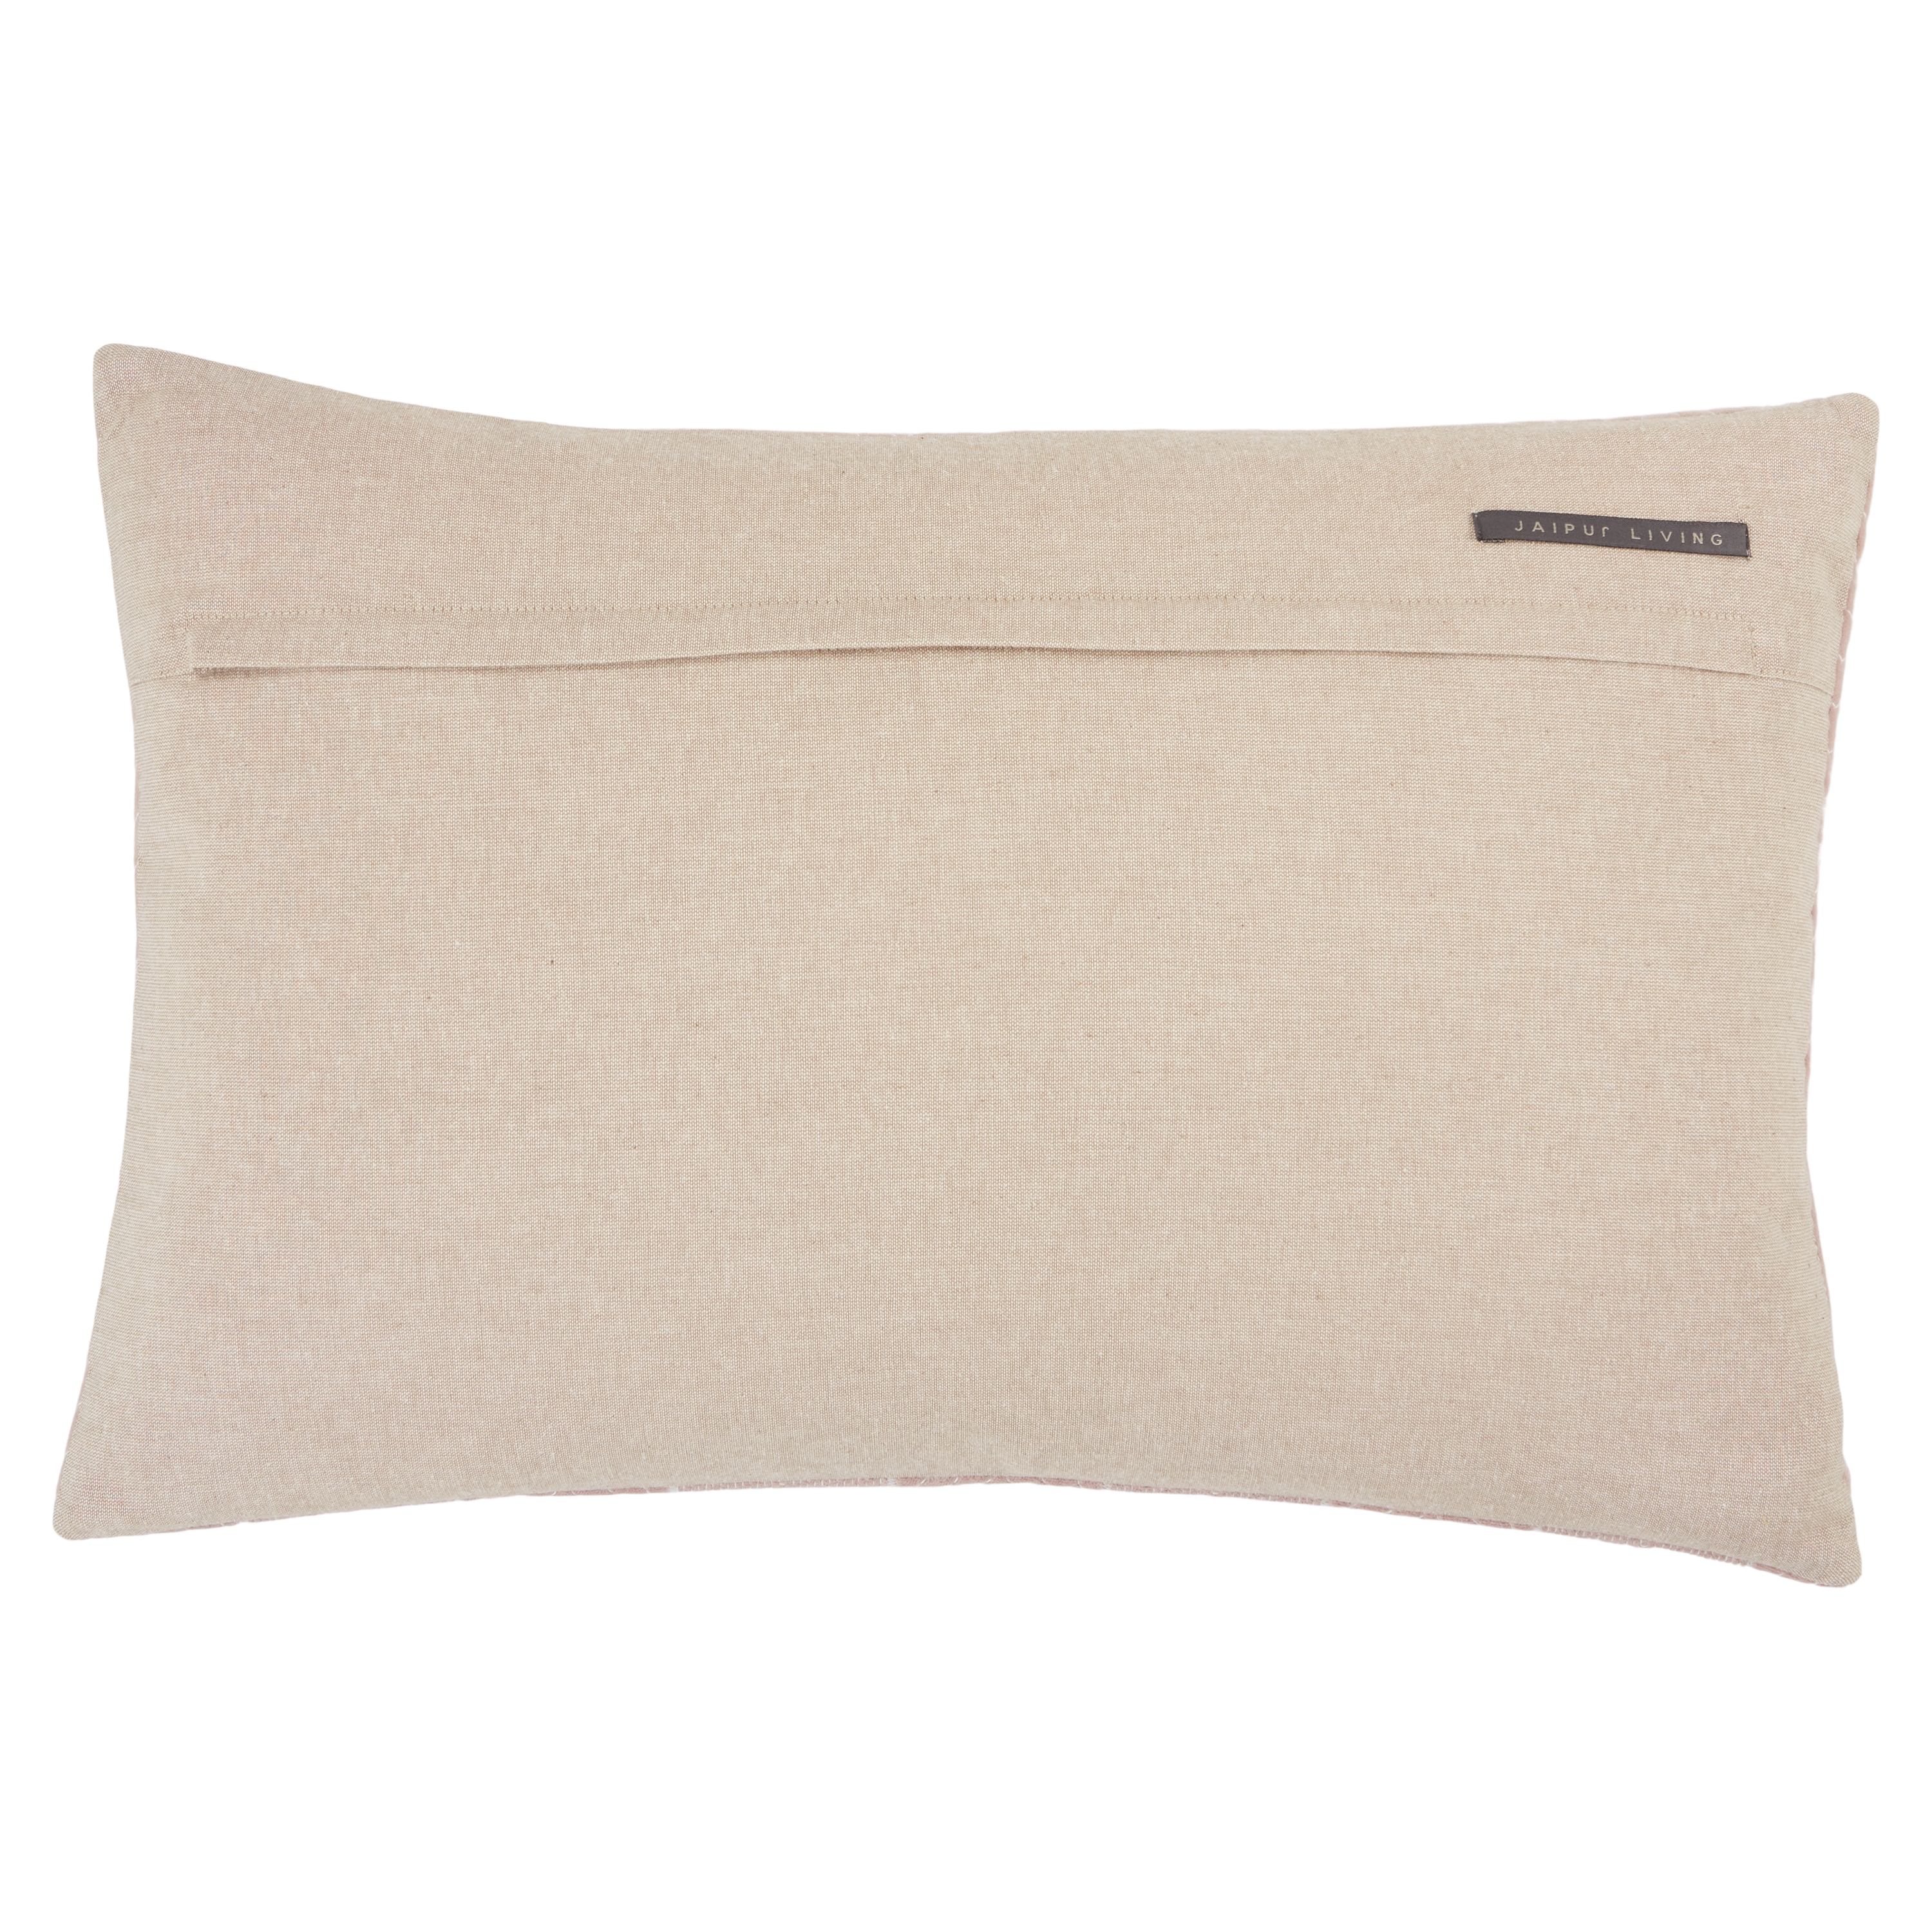 Design (US) Blush 16"X24" Pillow - Image 1